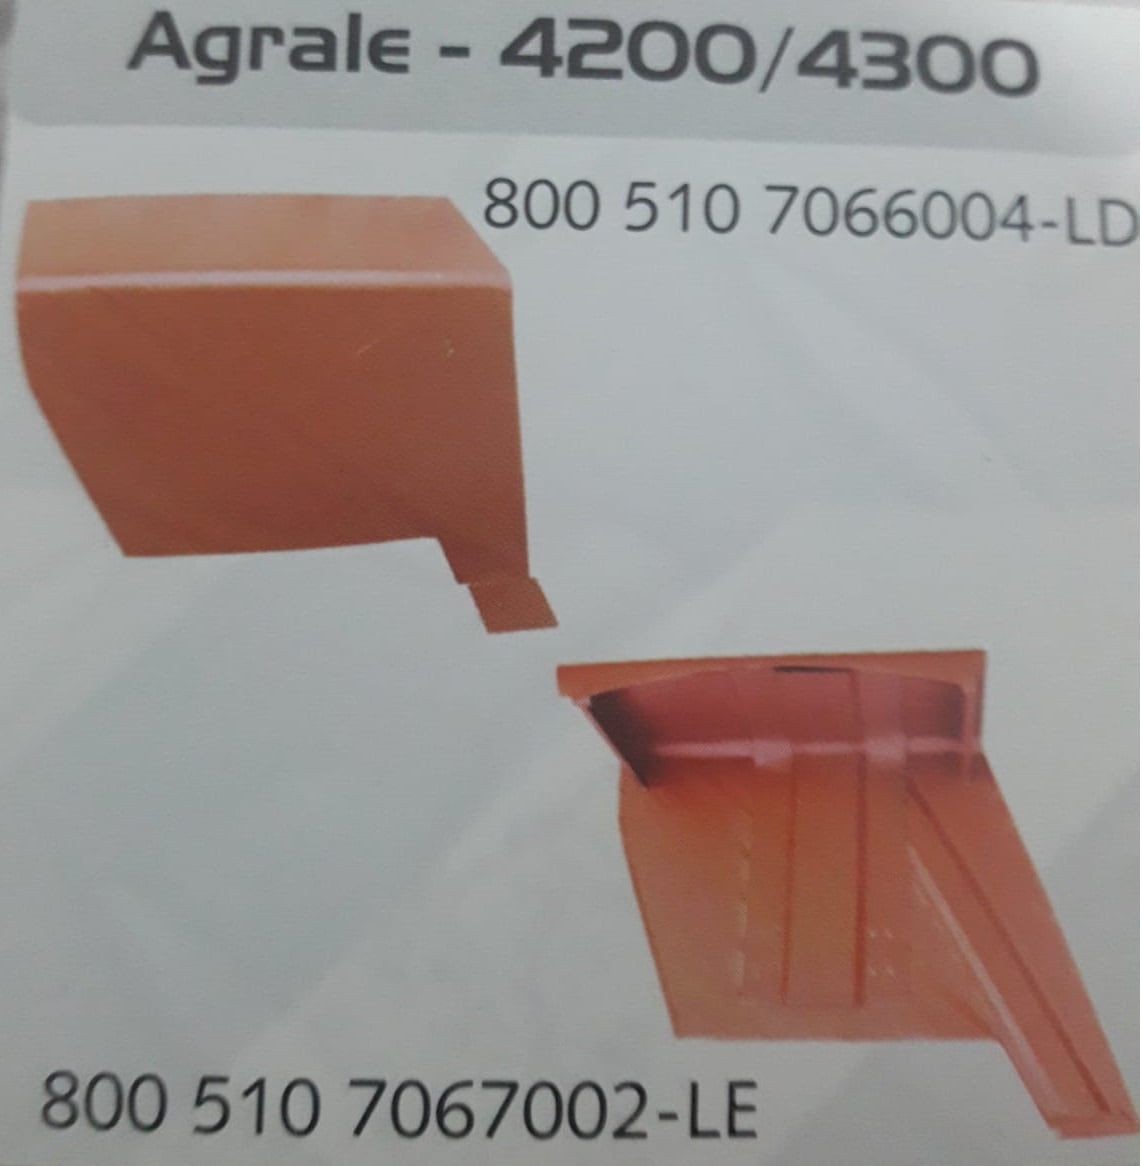 PARALAMA - AGRALE  4200 / 4300